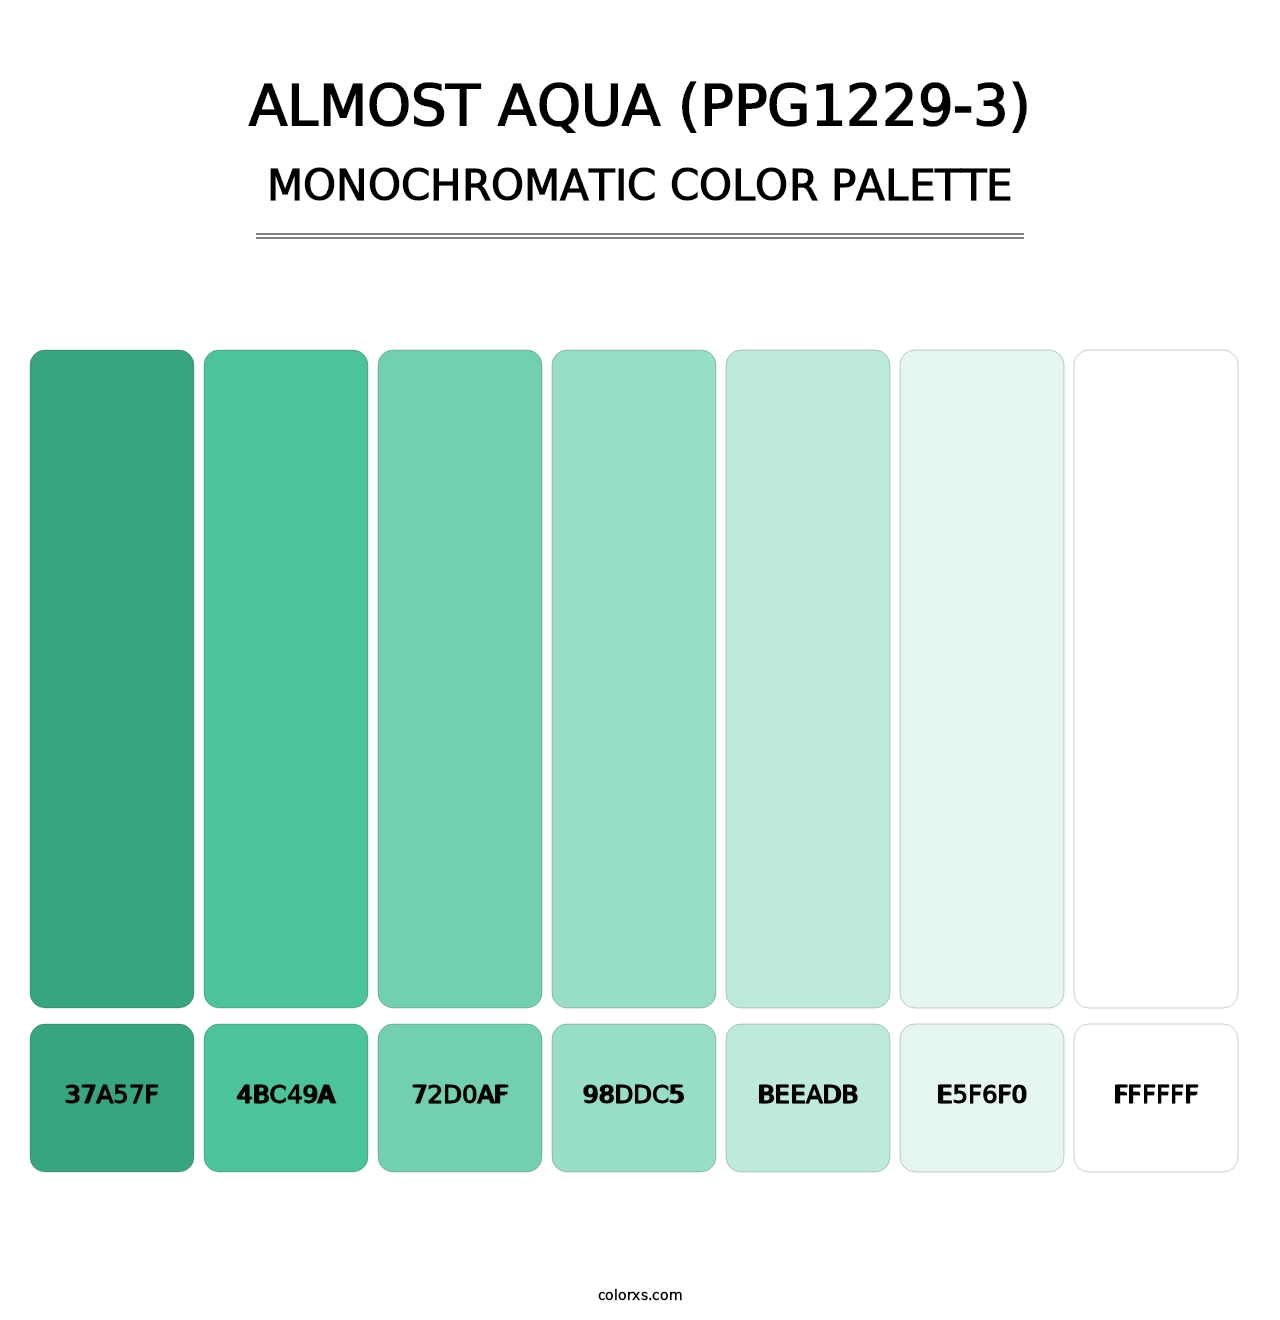 Almost Aqua (PPG1229-3) - Monochromatic Color Palette